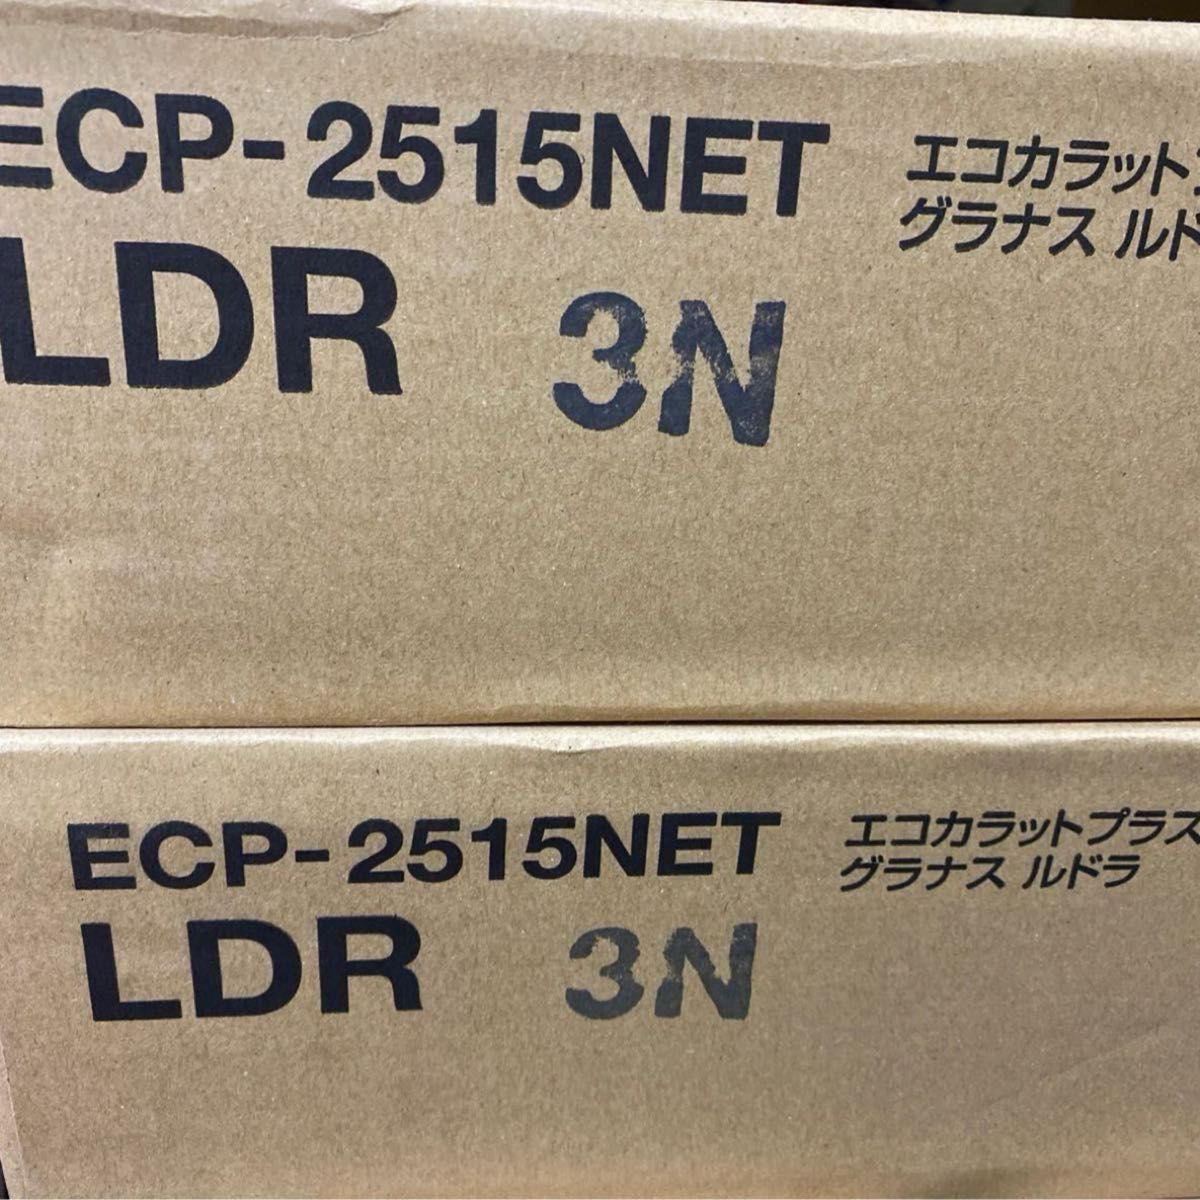 ECP-2515NET LDR 3N エコカラットプラス グラナス ルドラ ブラウン diy 調湿 脱臭 